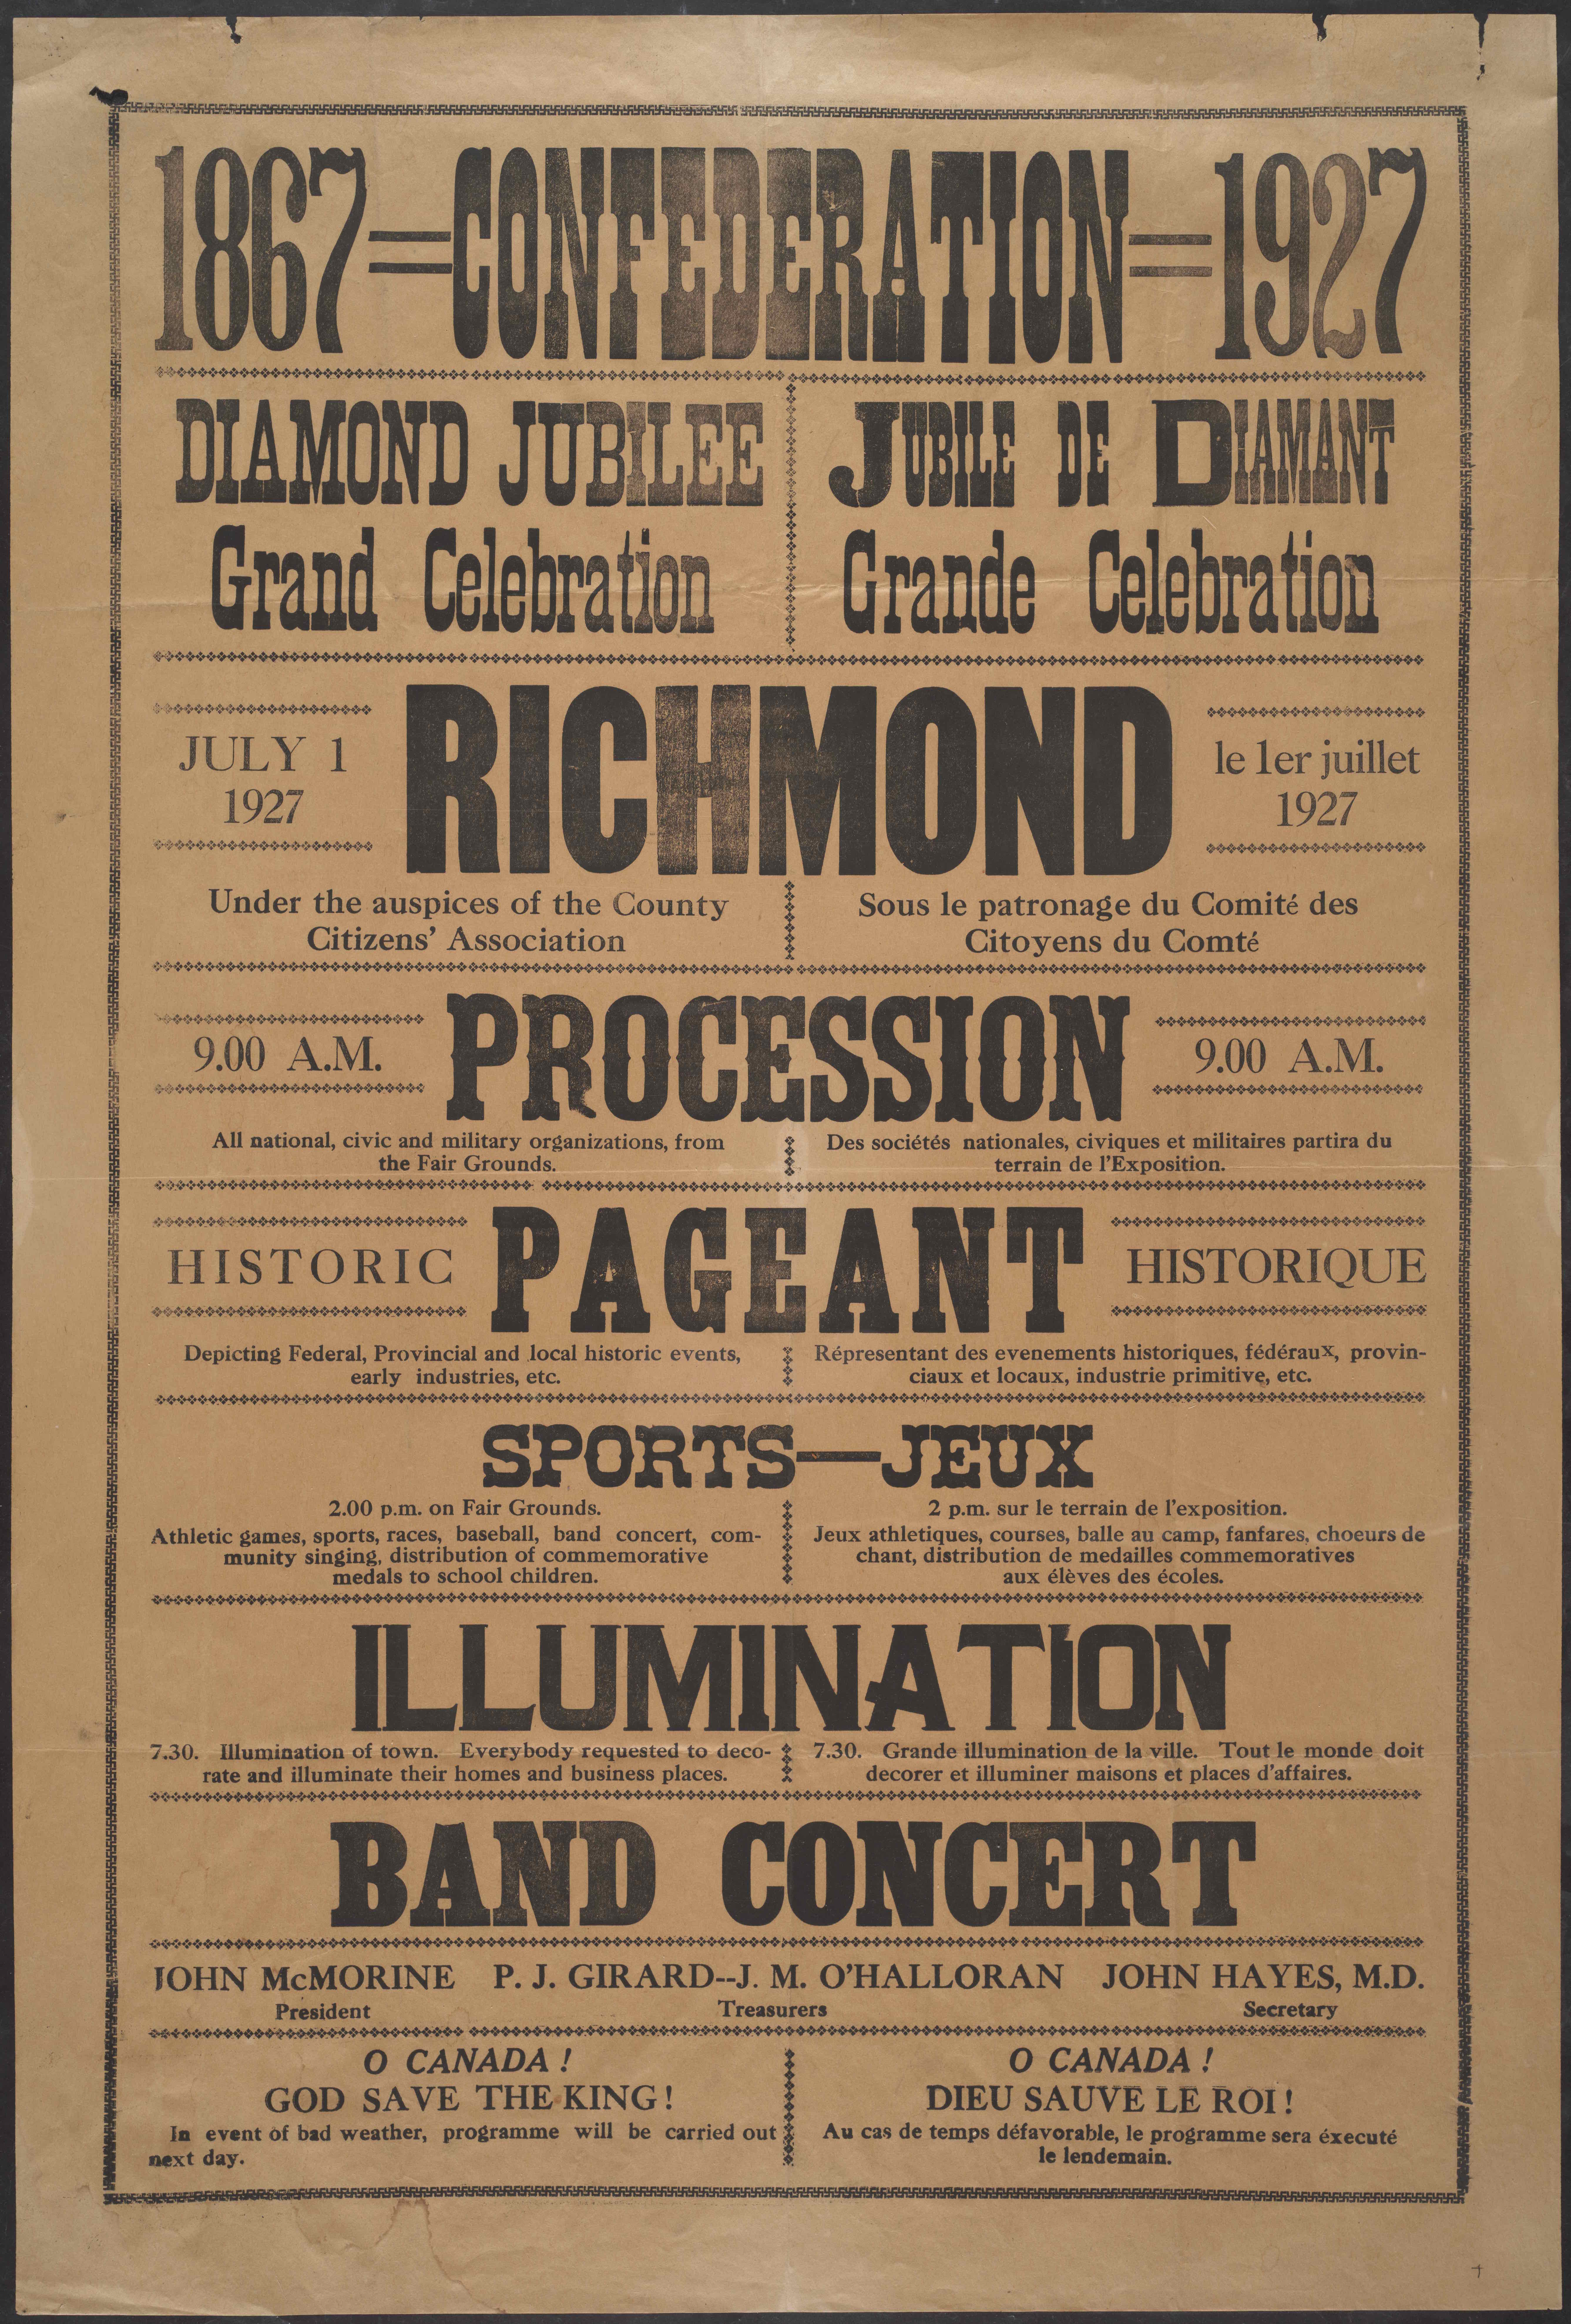 Richmond County Citizens' Association (Québec). (1927). Confederation, 1867-1927: Diamond jubilee grand celebration, July 1st, 1927, Richmond, under the auspices of the County Citizens' Association.